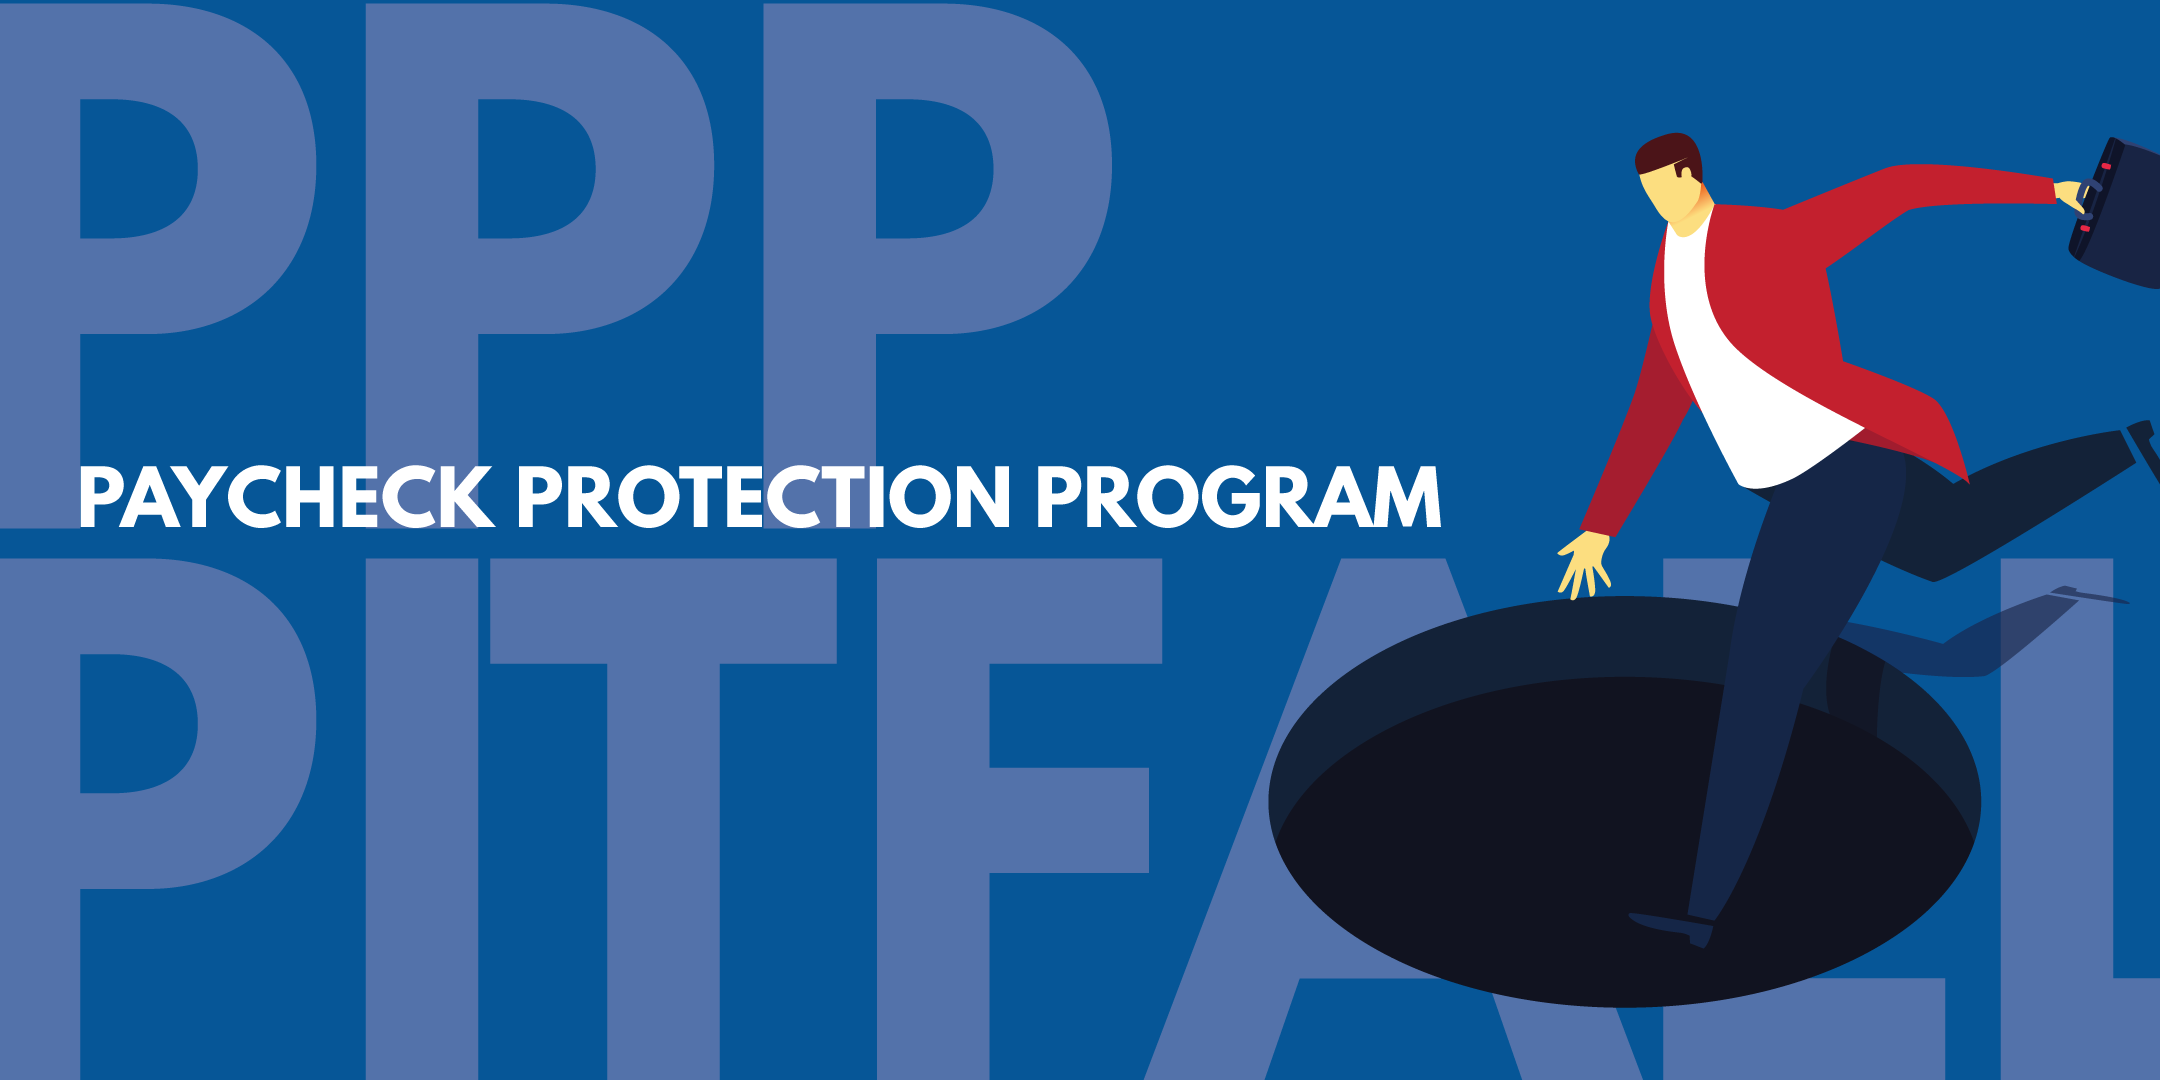 Paycheck Protection Program (PPP) Pitfalls